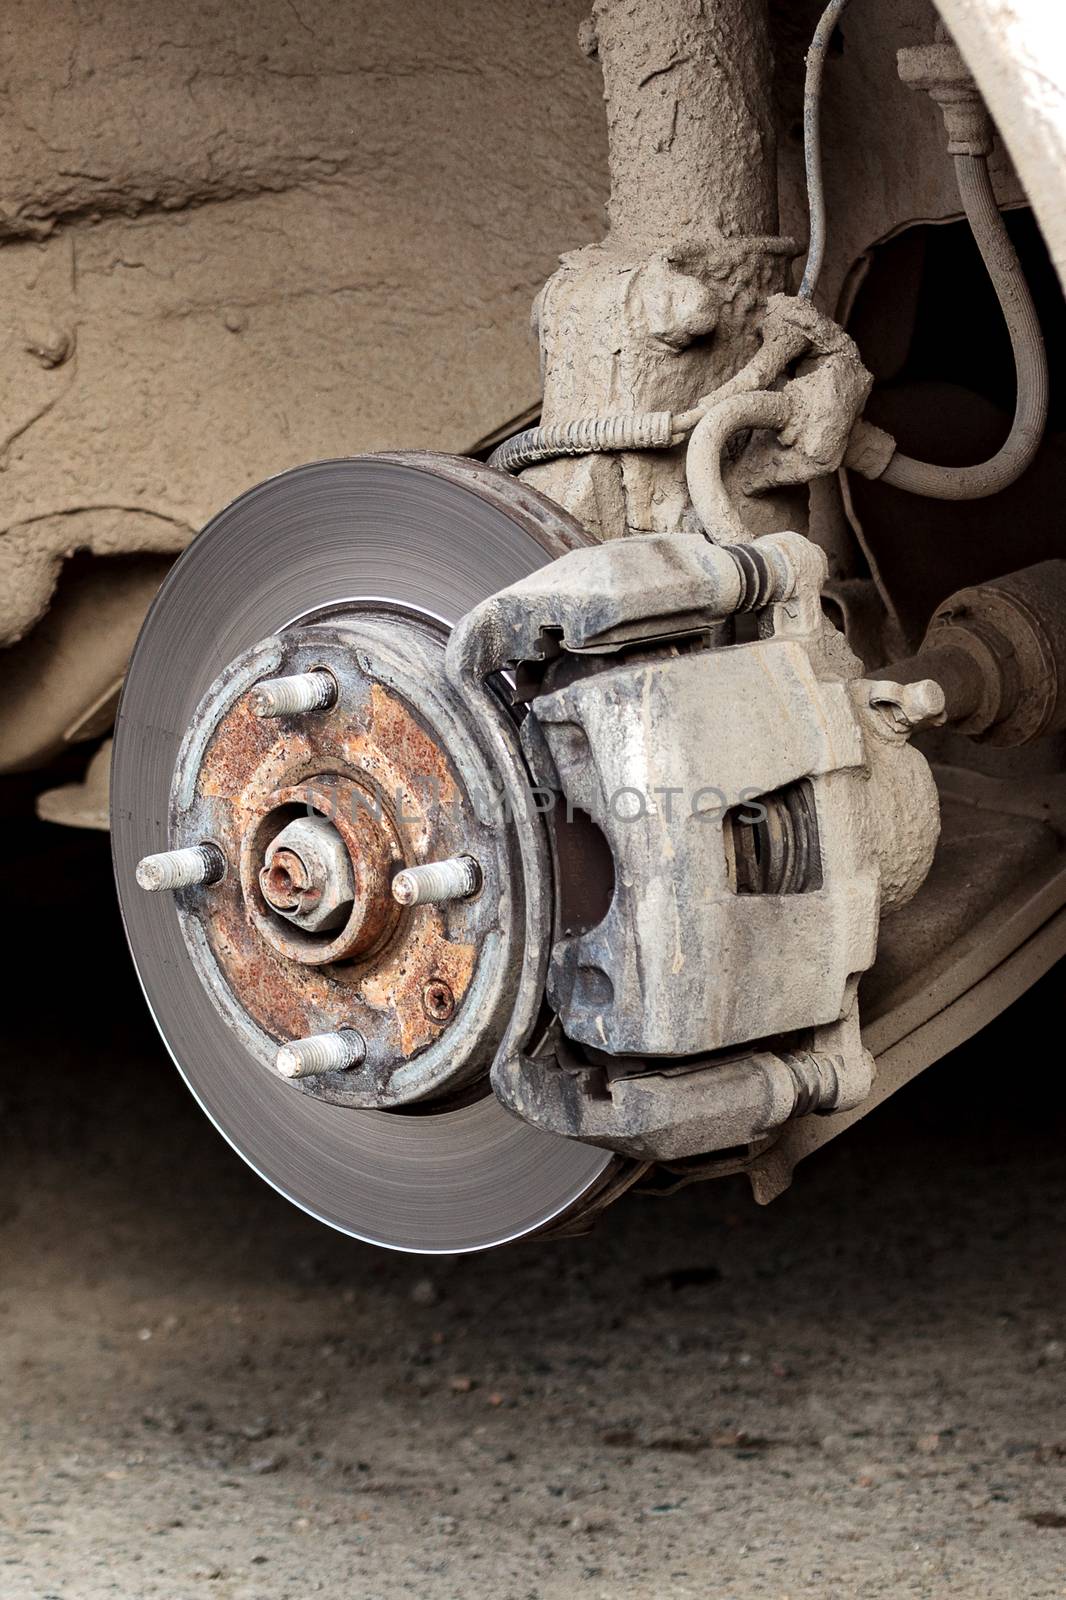 Closeup shot of car's disc brake without wheel on it